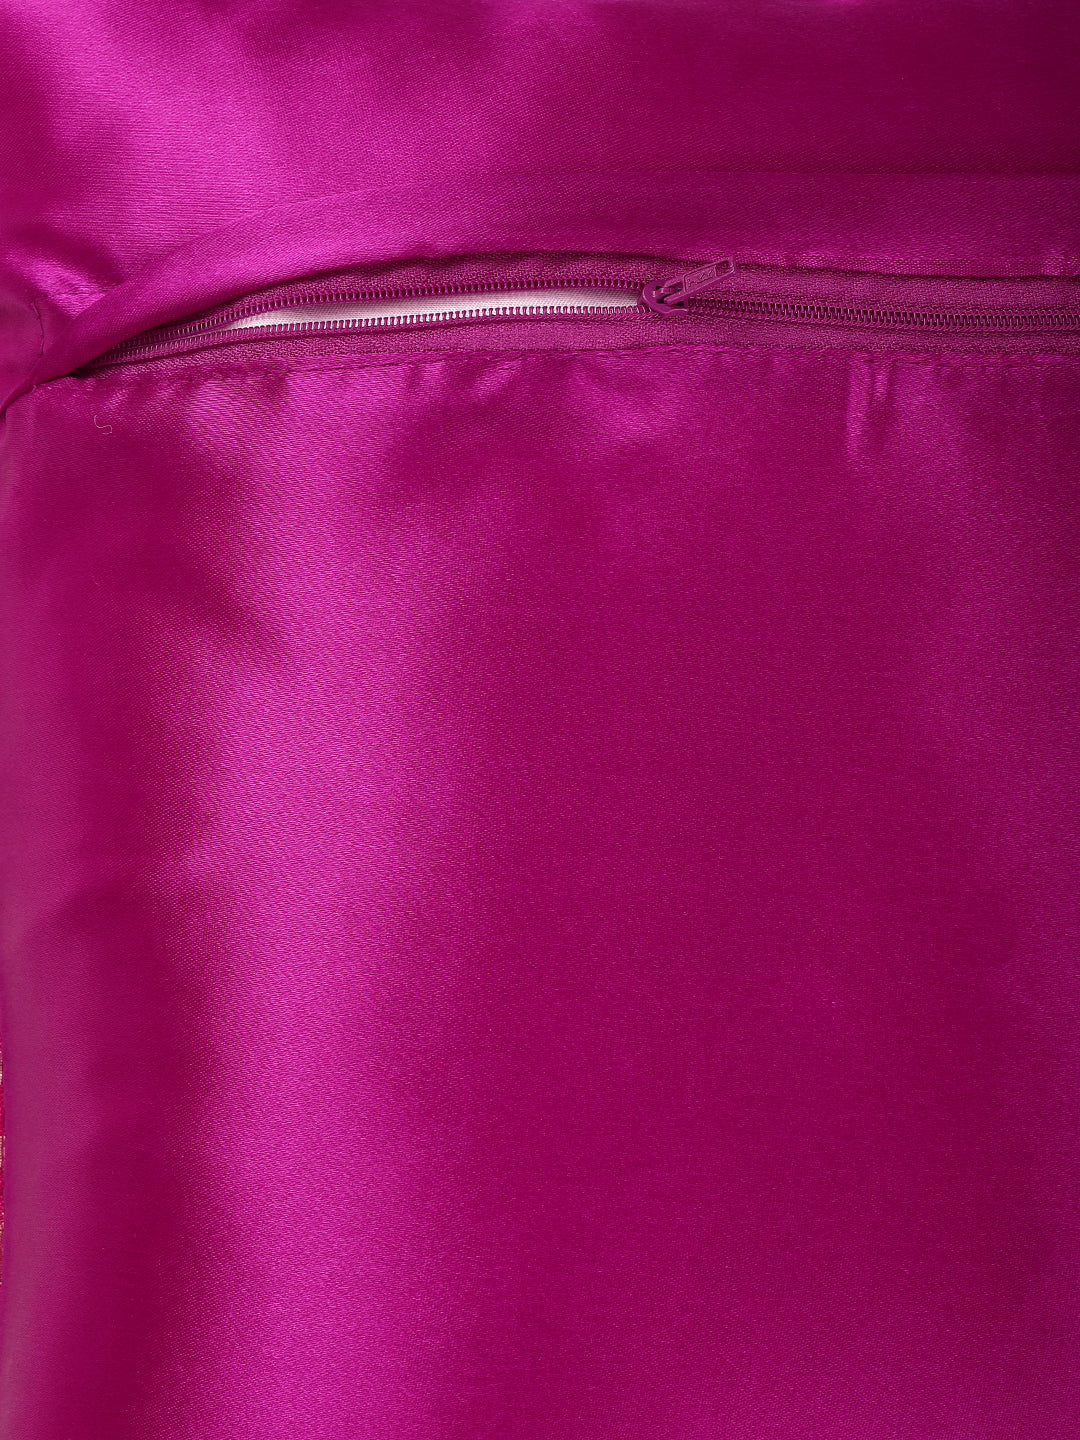 Silkfab Set 0f 5 Decorative Silk Cushion Covers (16x16) Drop Fuchsia - SILKFAB